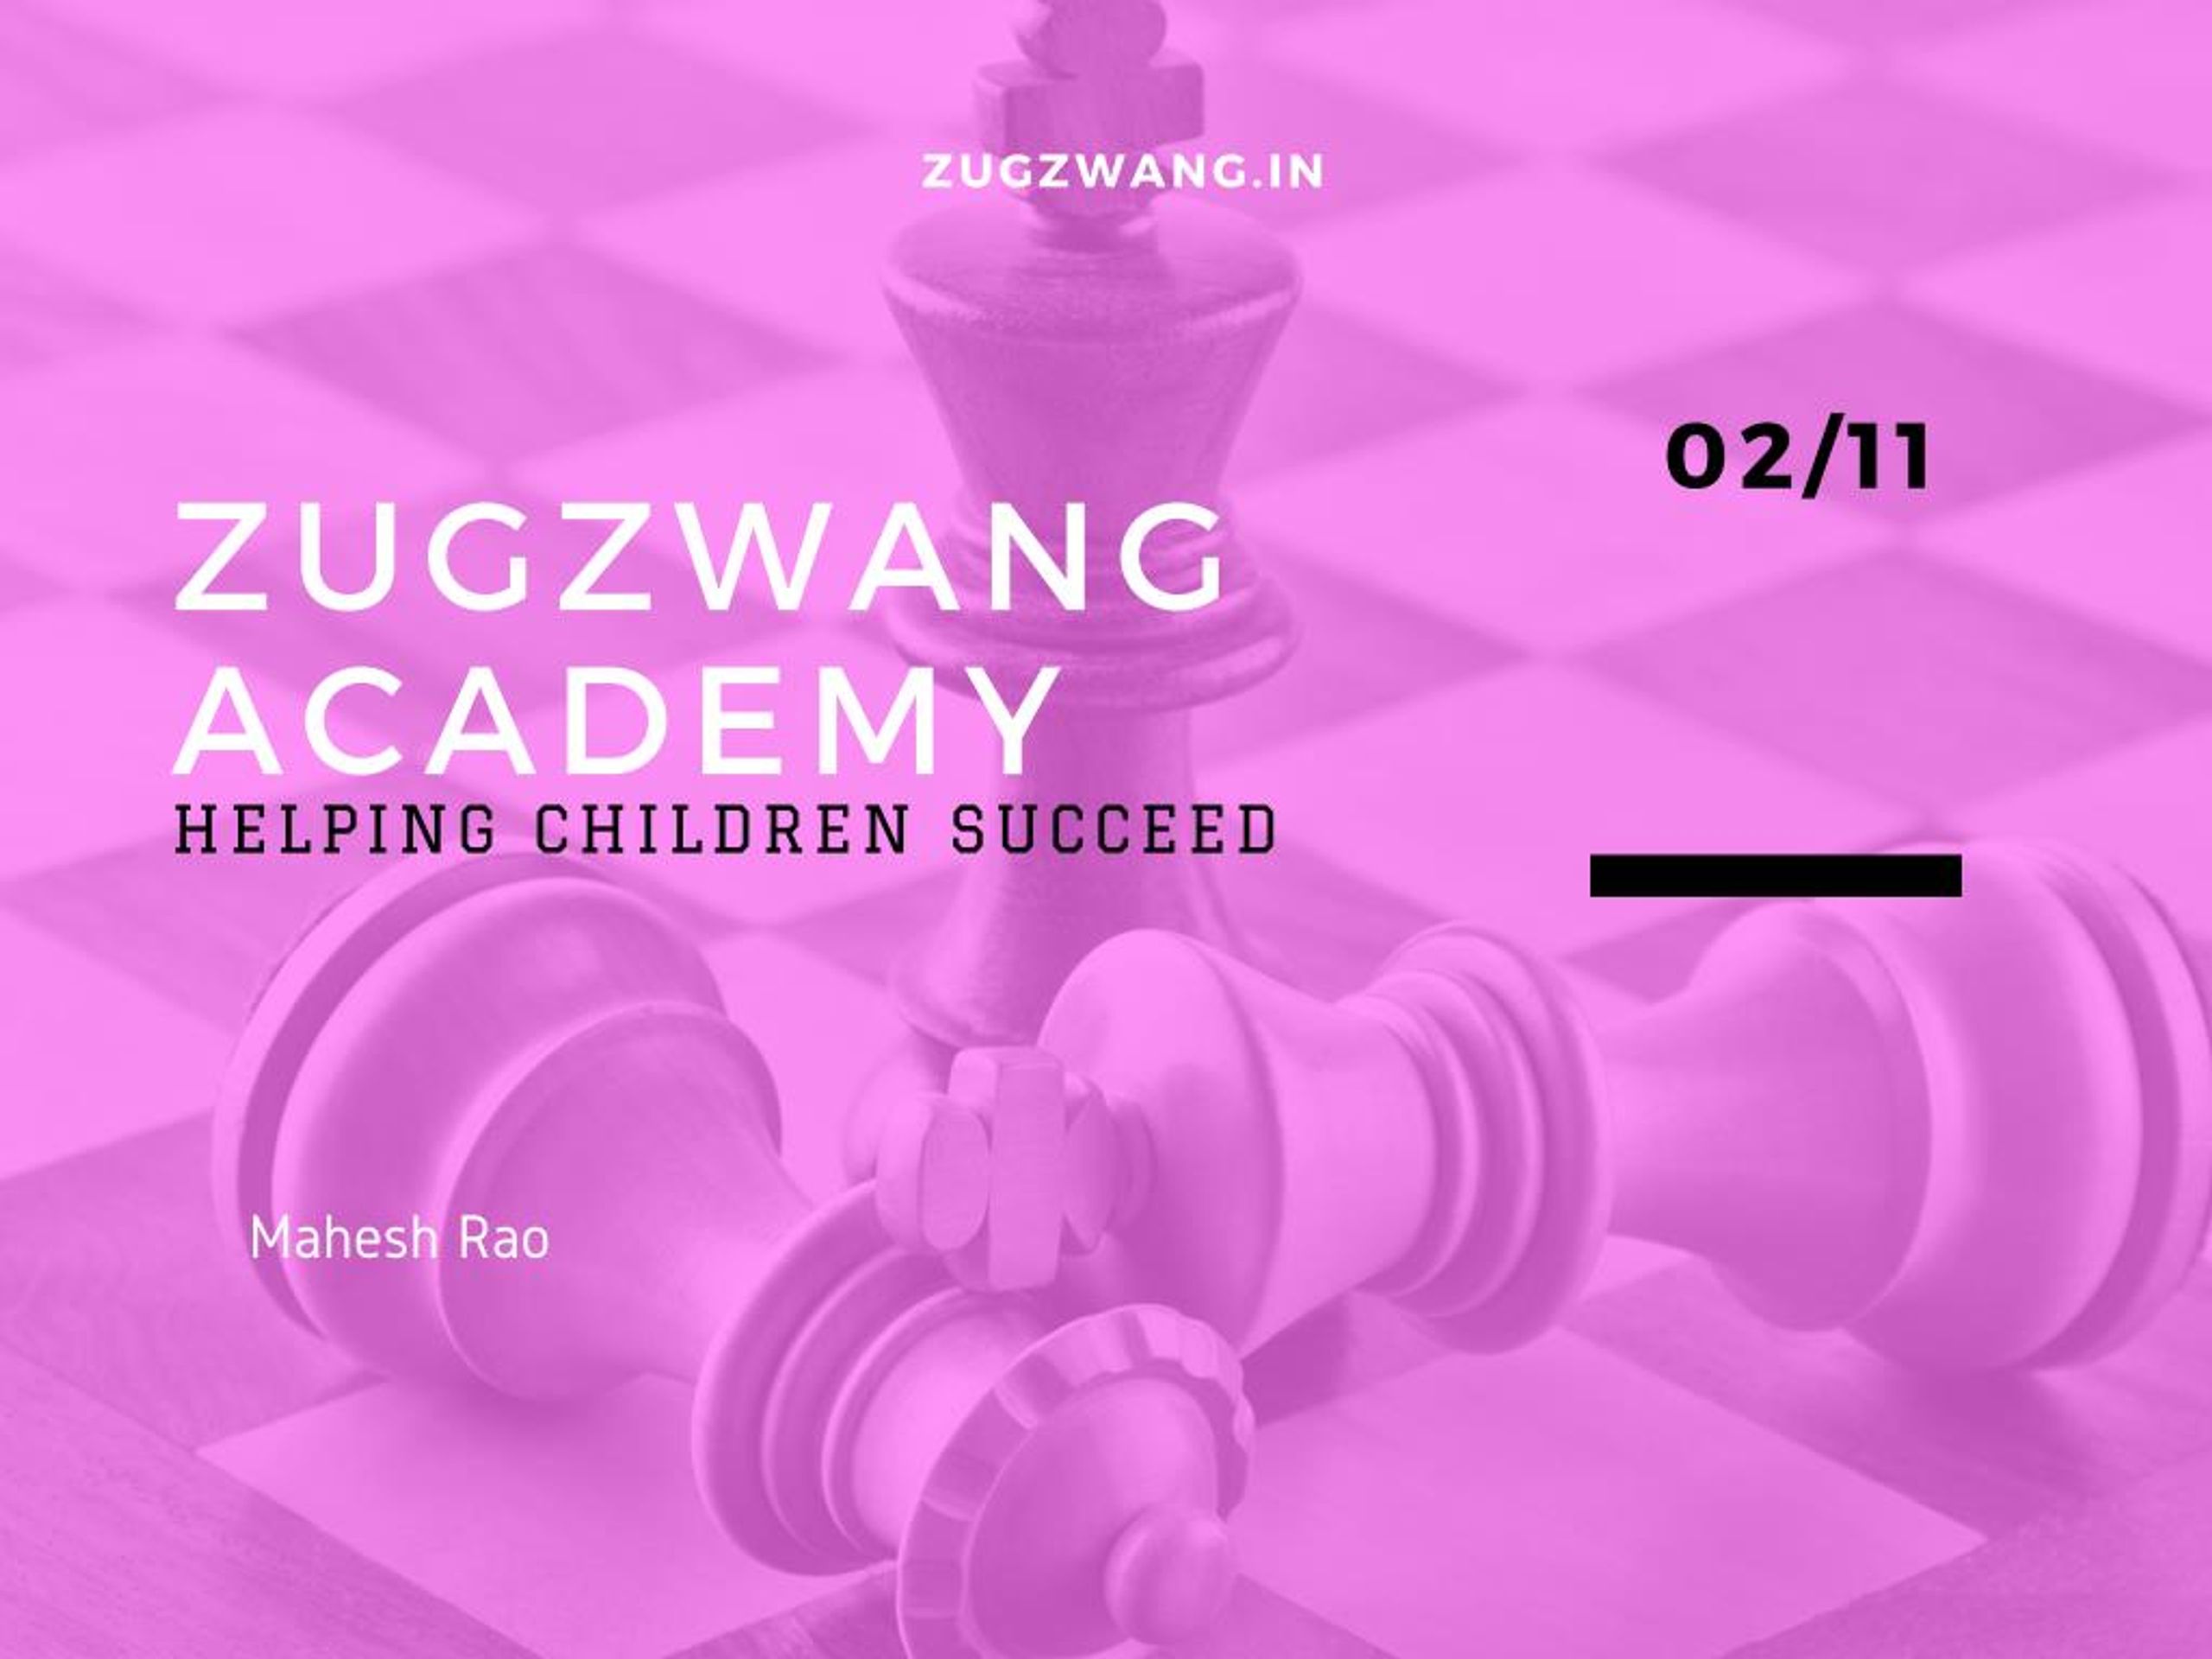 zugzwang — Chess Blog  Chess Info and News - ZugZwang Academy